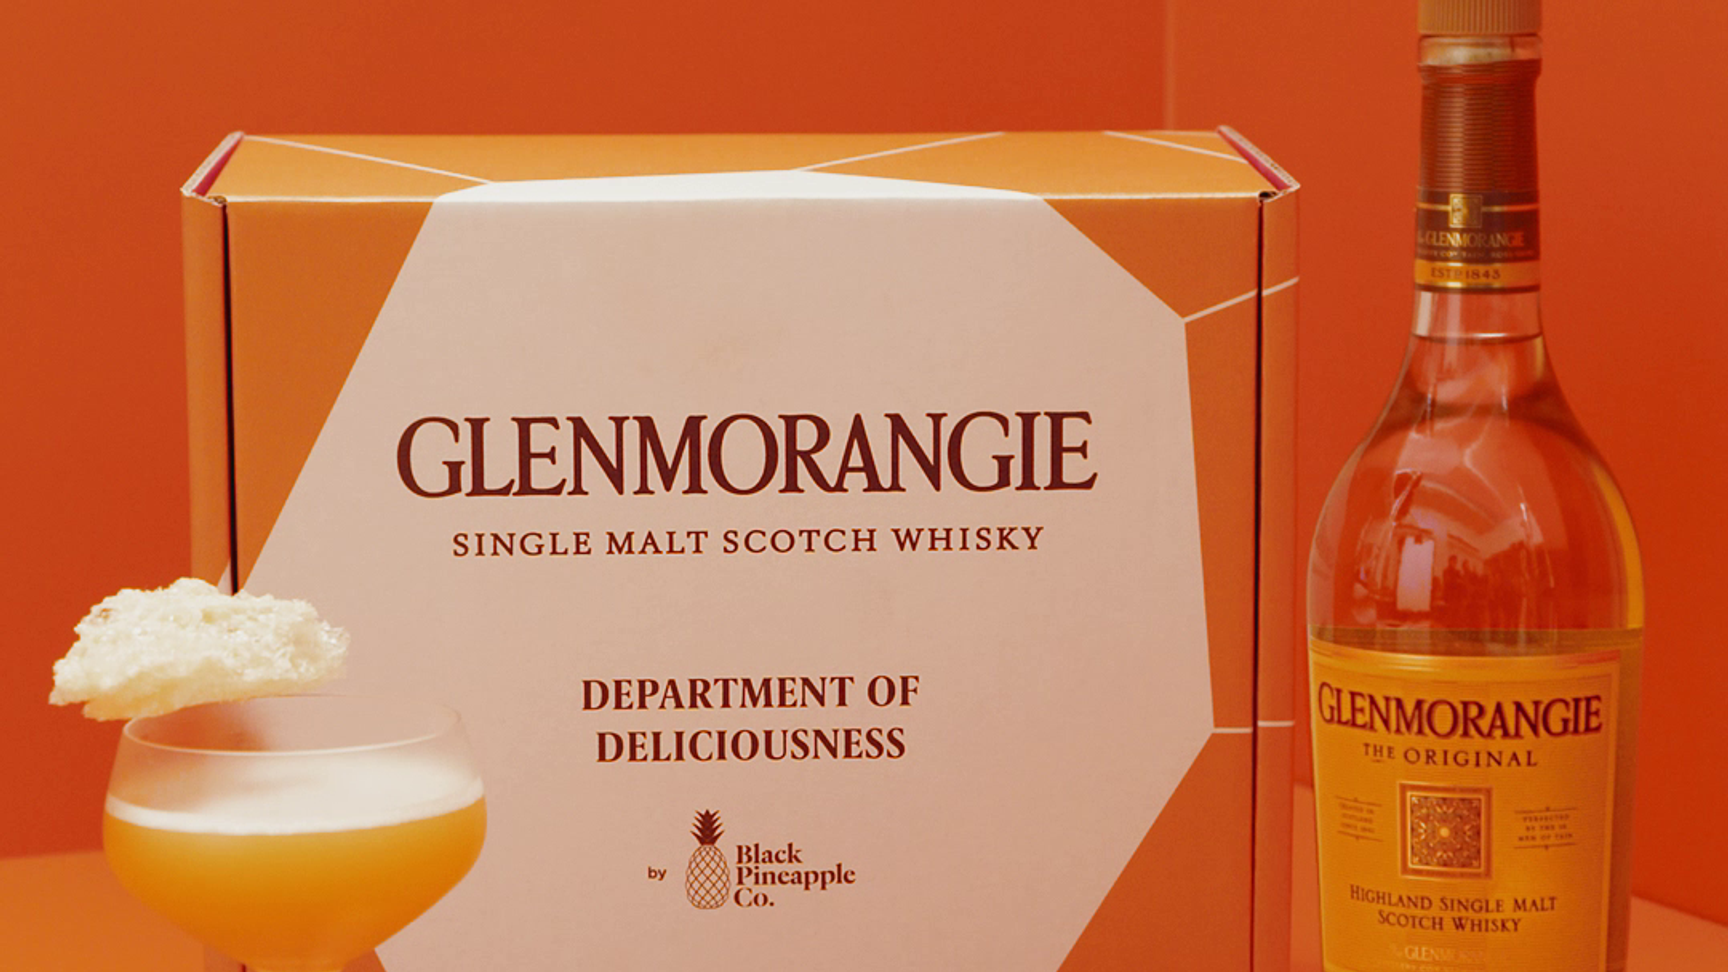 Glenmorangie - Department of Delicious